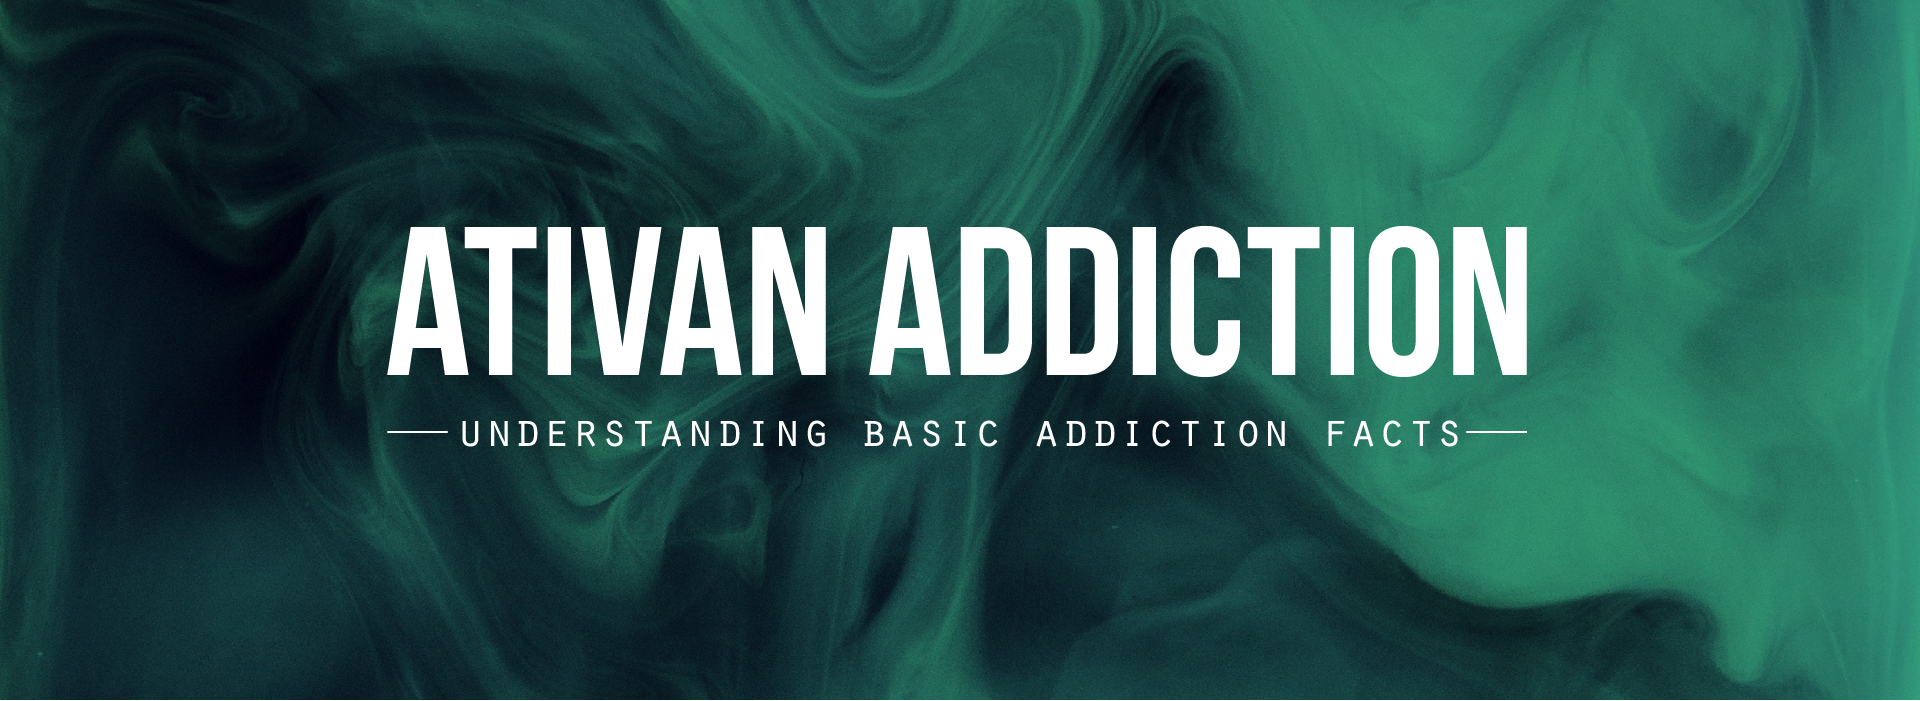 Ativan Addiction Header